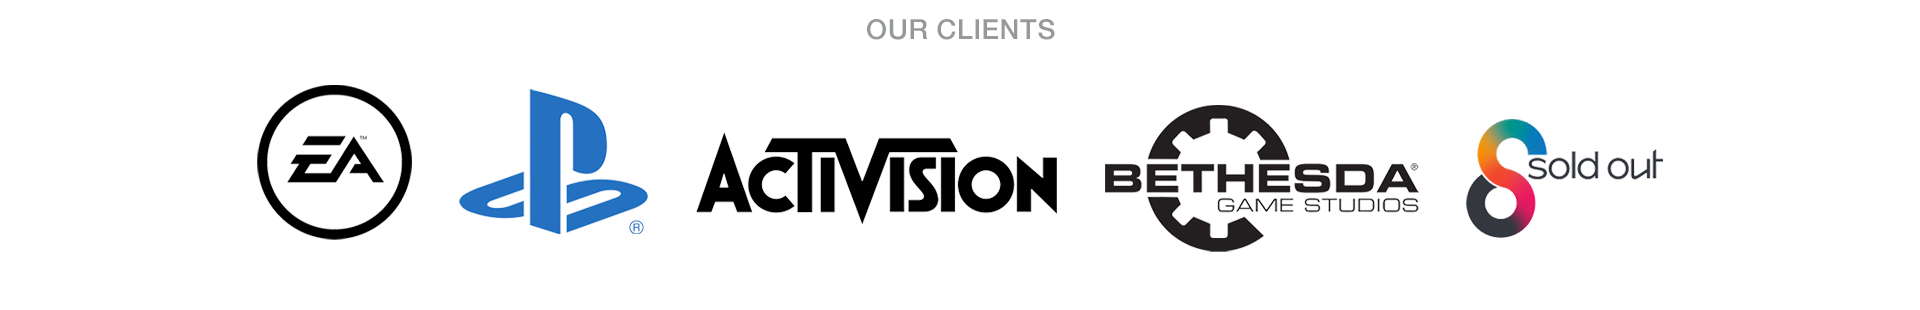 client-logo-video-games